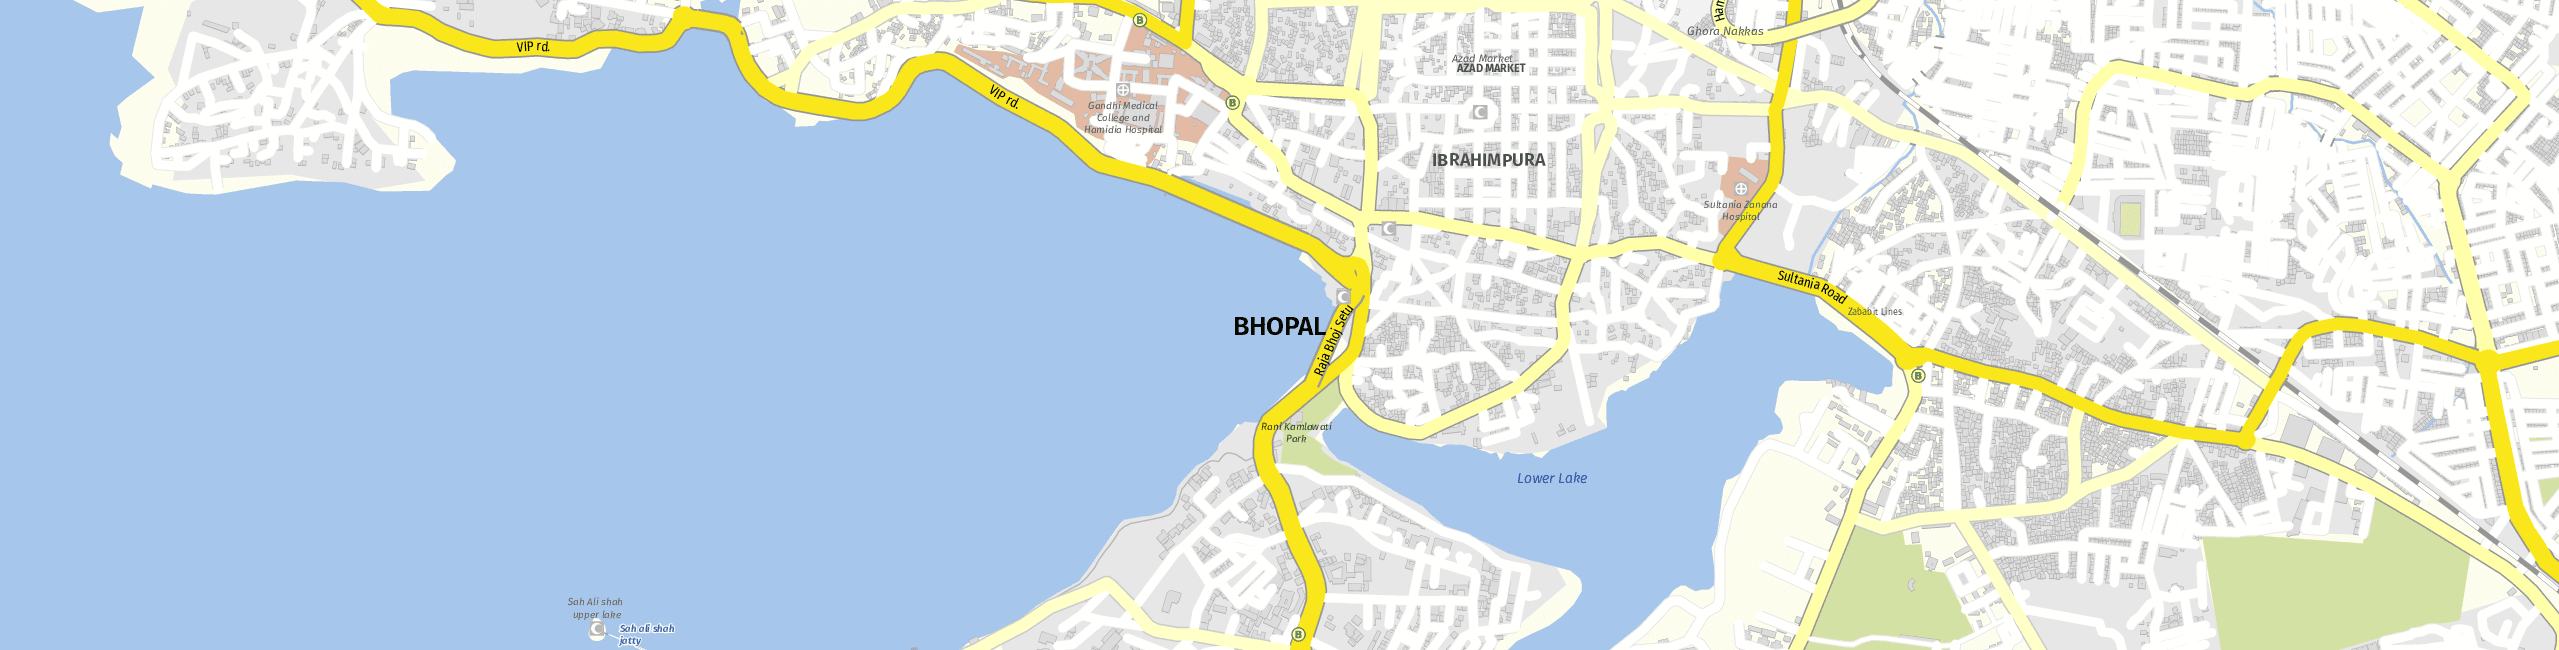 Stadtplan Bhopal zum Downloaden.